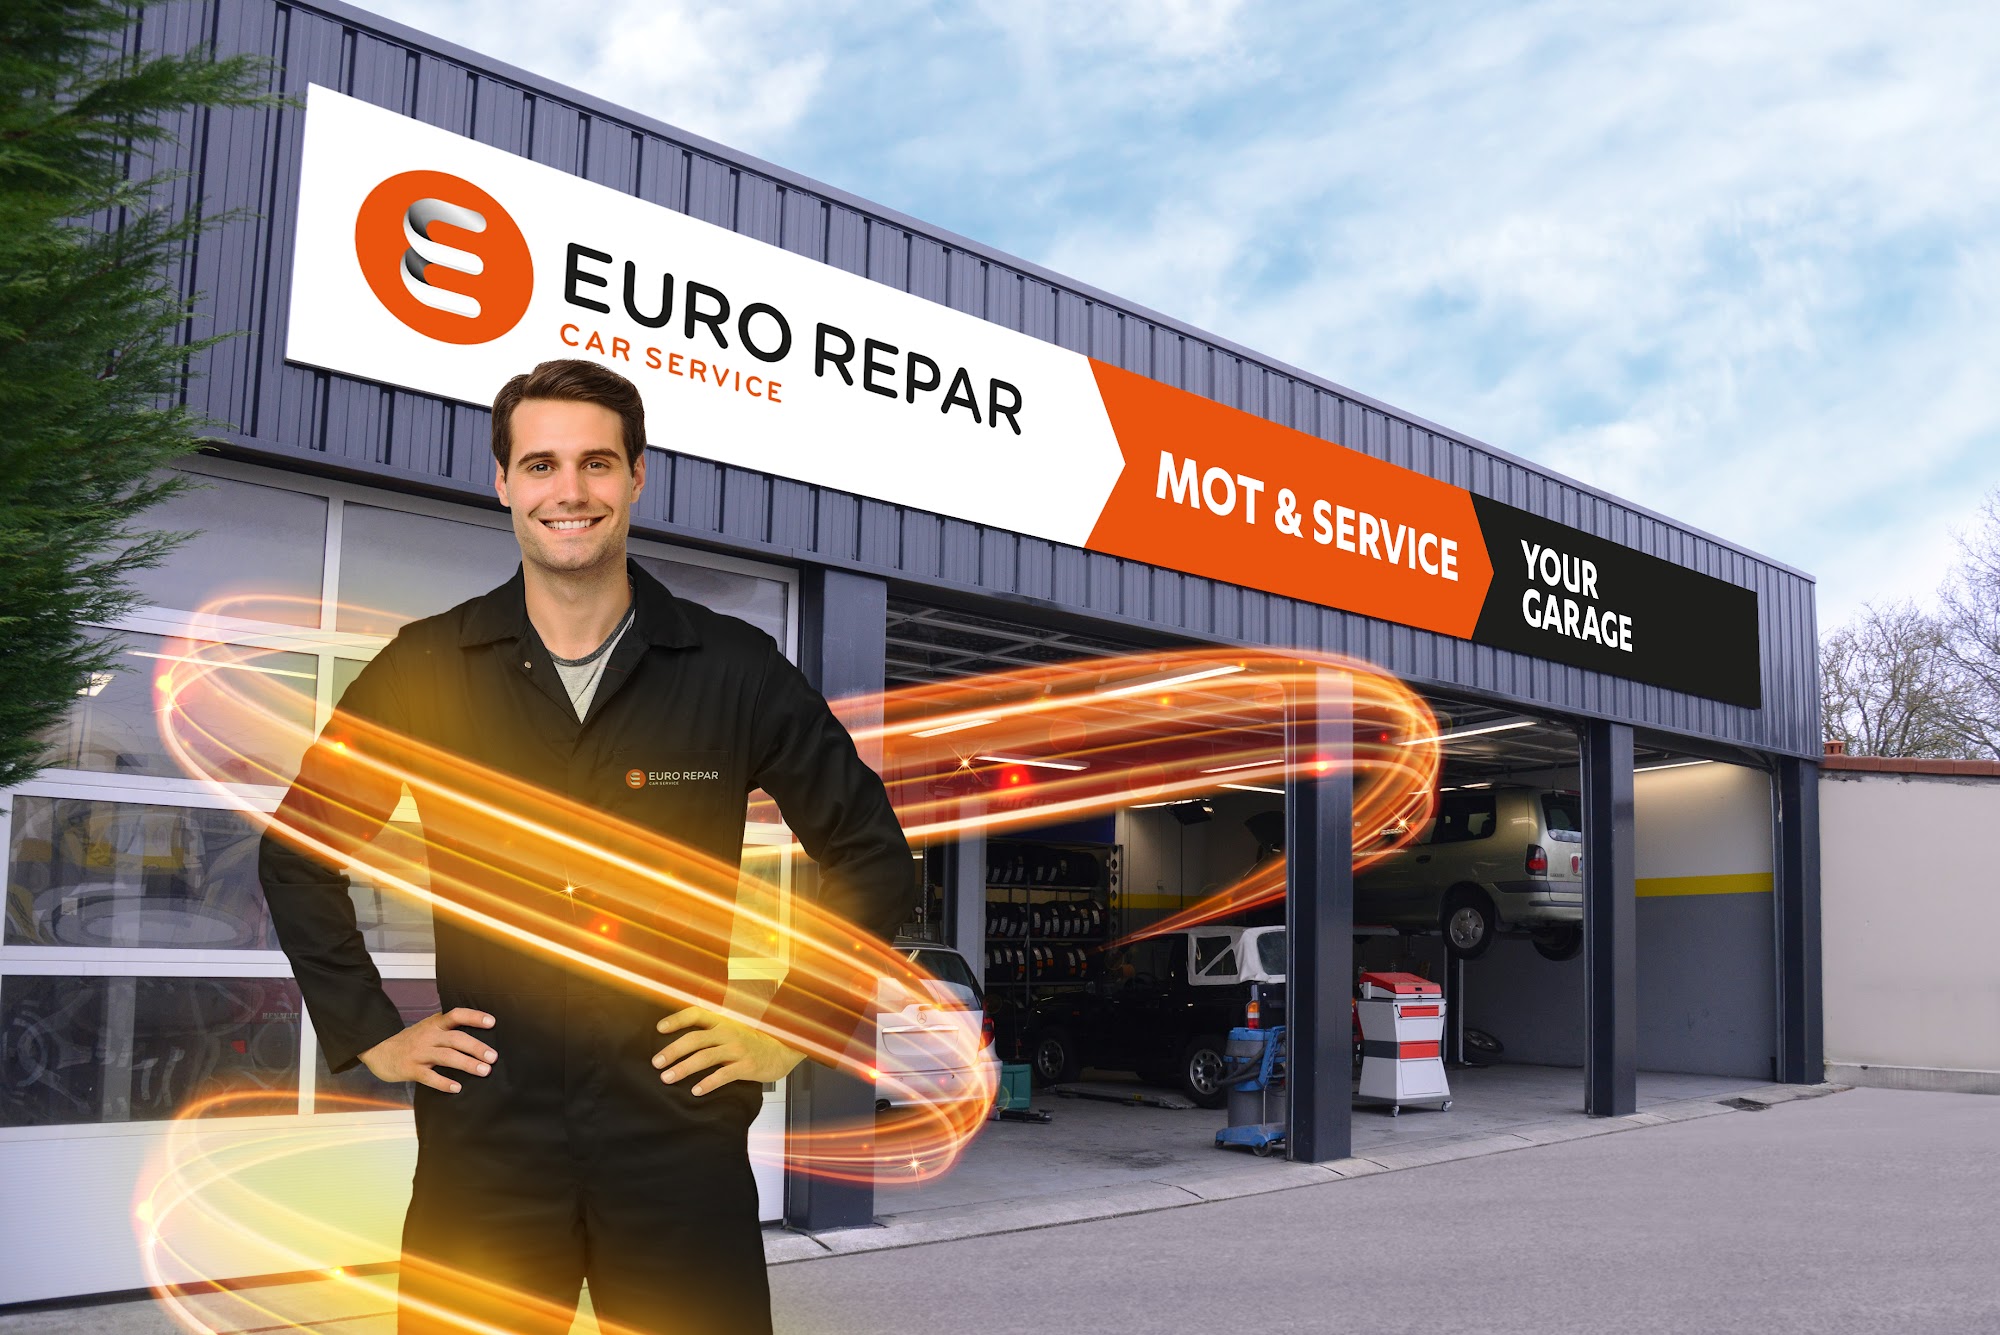 Dalziels Garage Services - Eurorepar Car Service